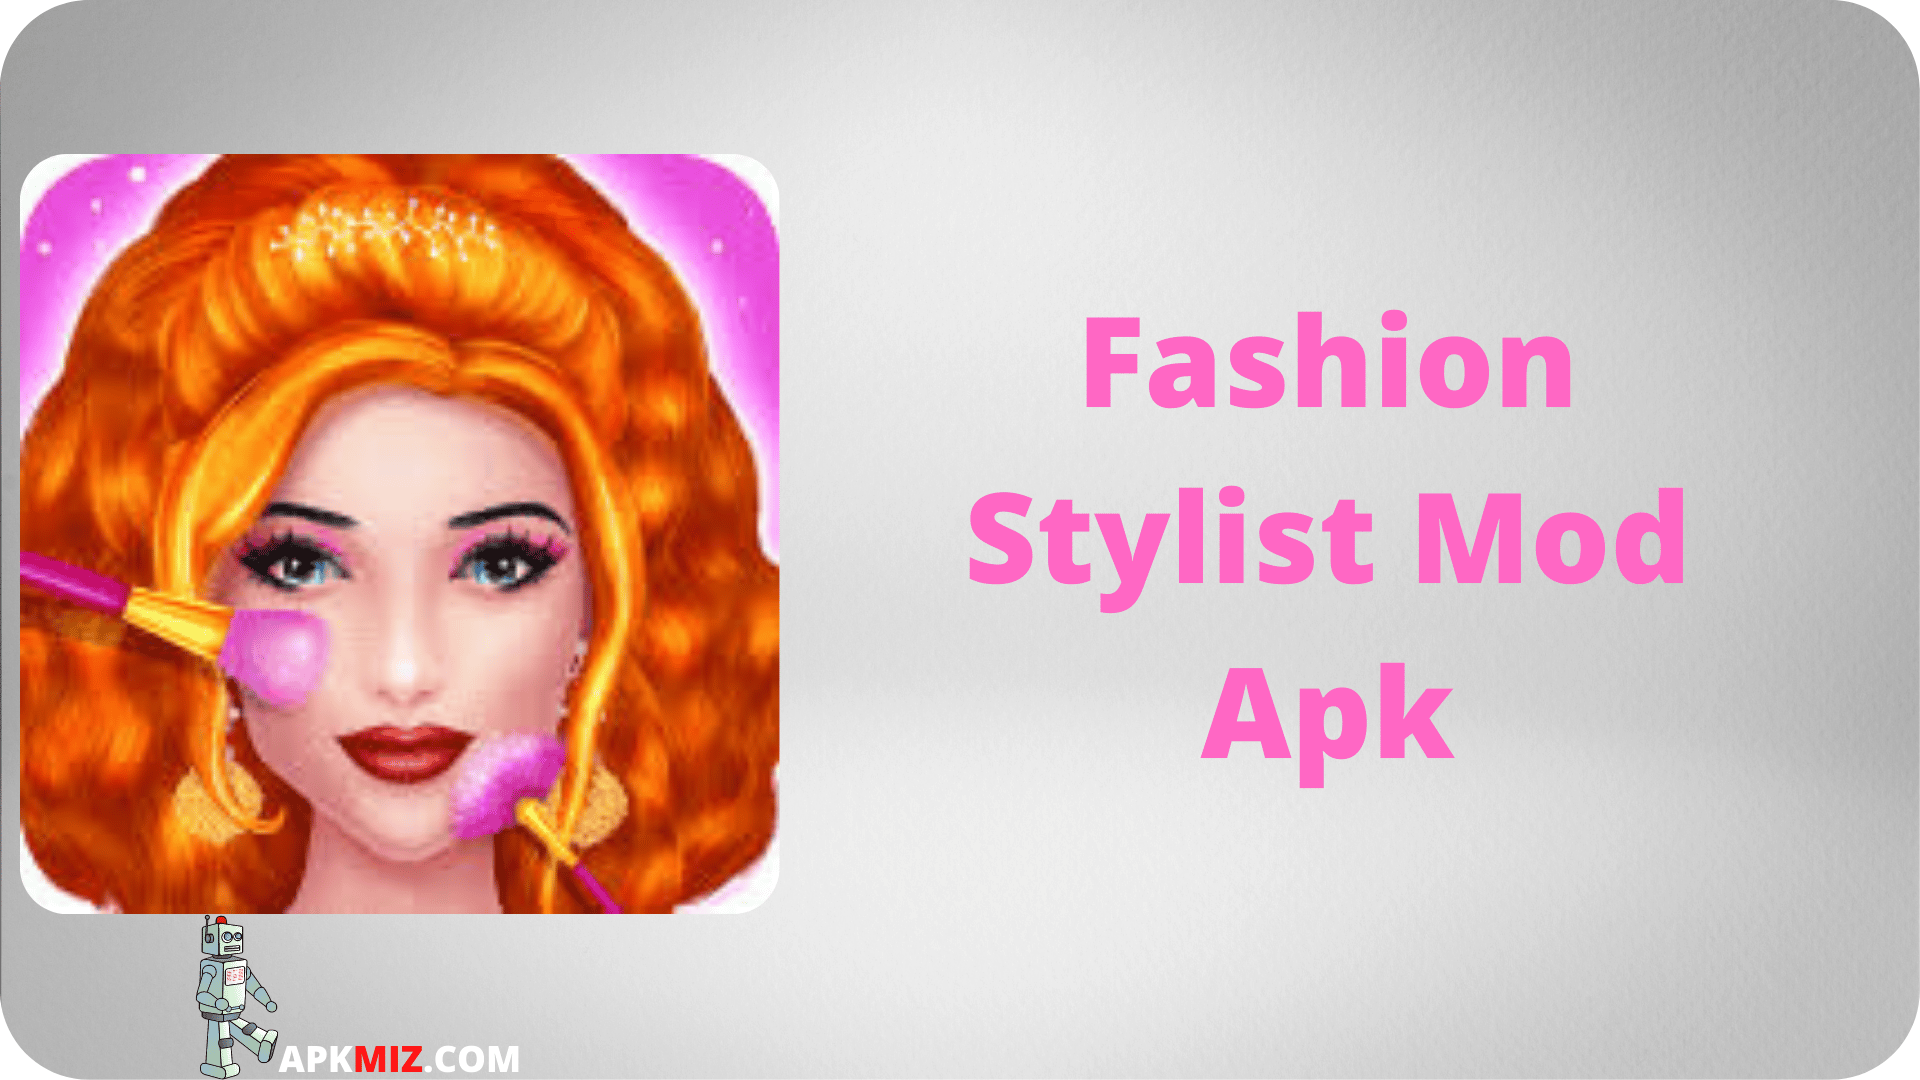 Fashion Stylist Mod Apk